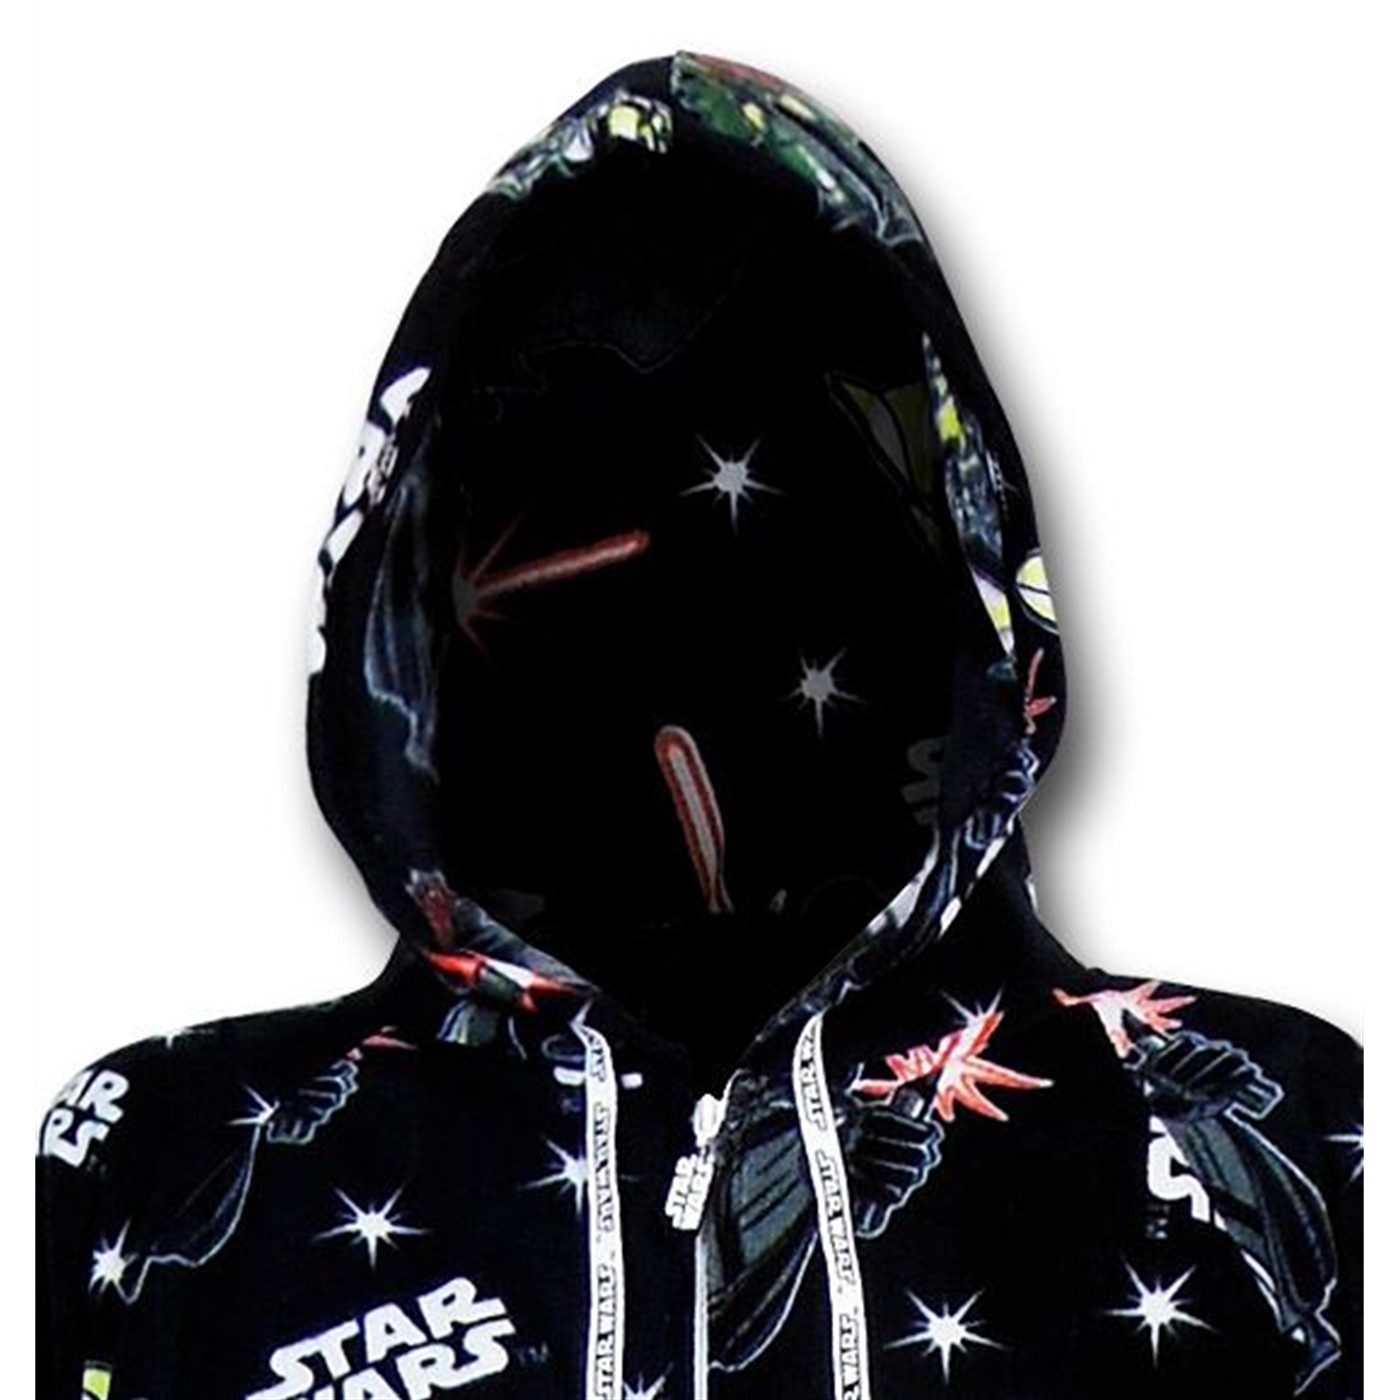 Star Wars Empire Black Footed Hooded Pajamas